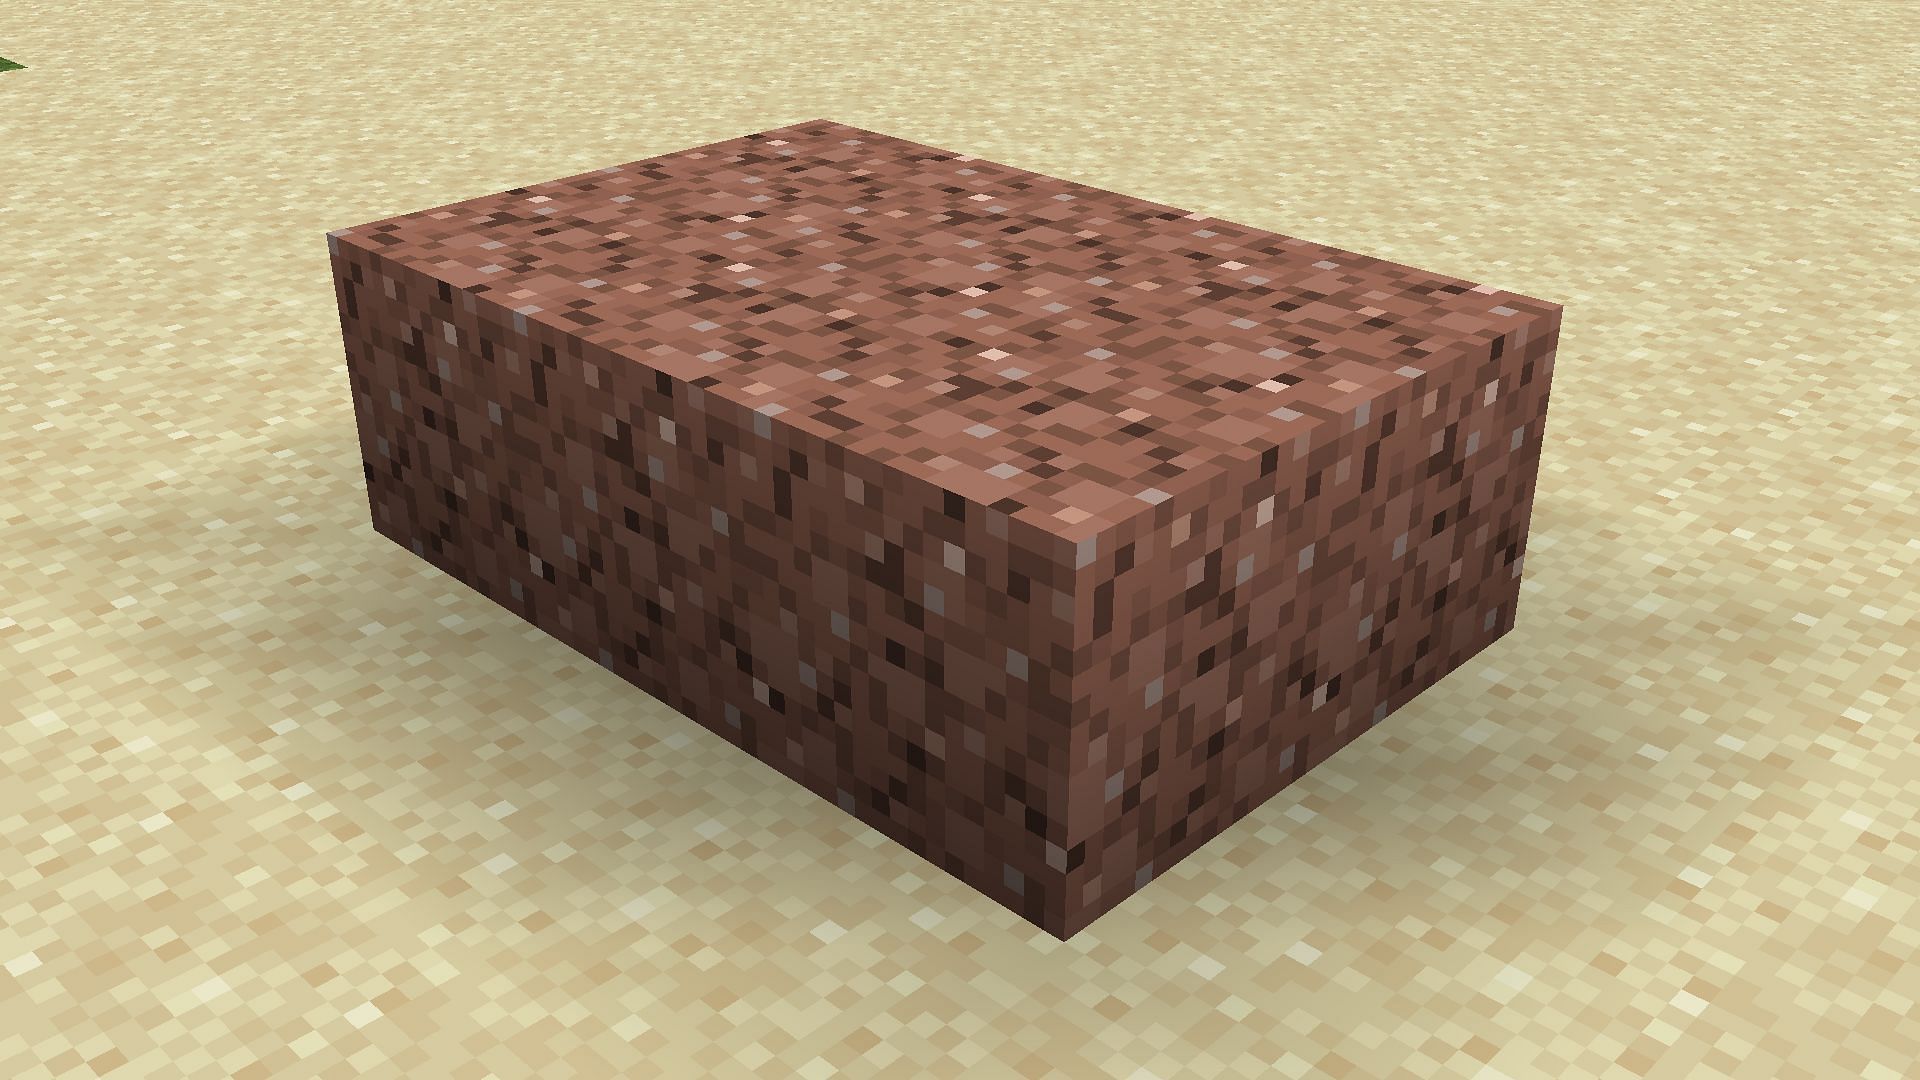 Granite blocks (Image via Minecraft)